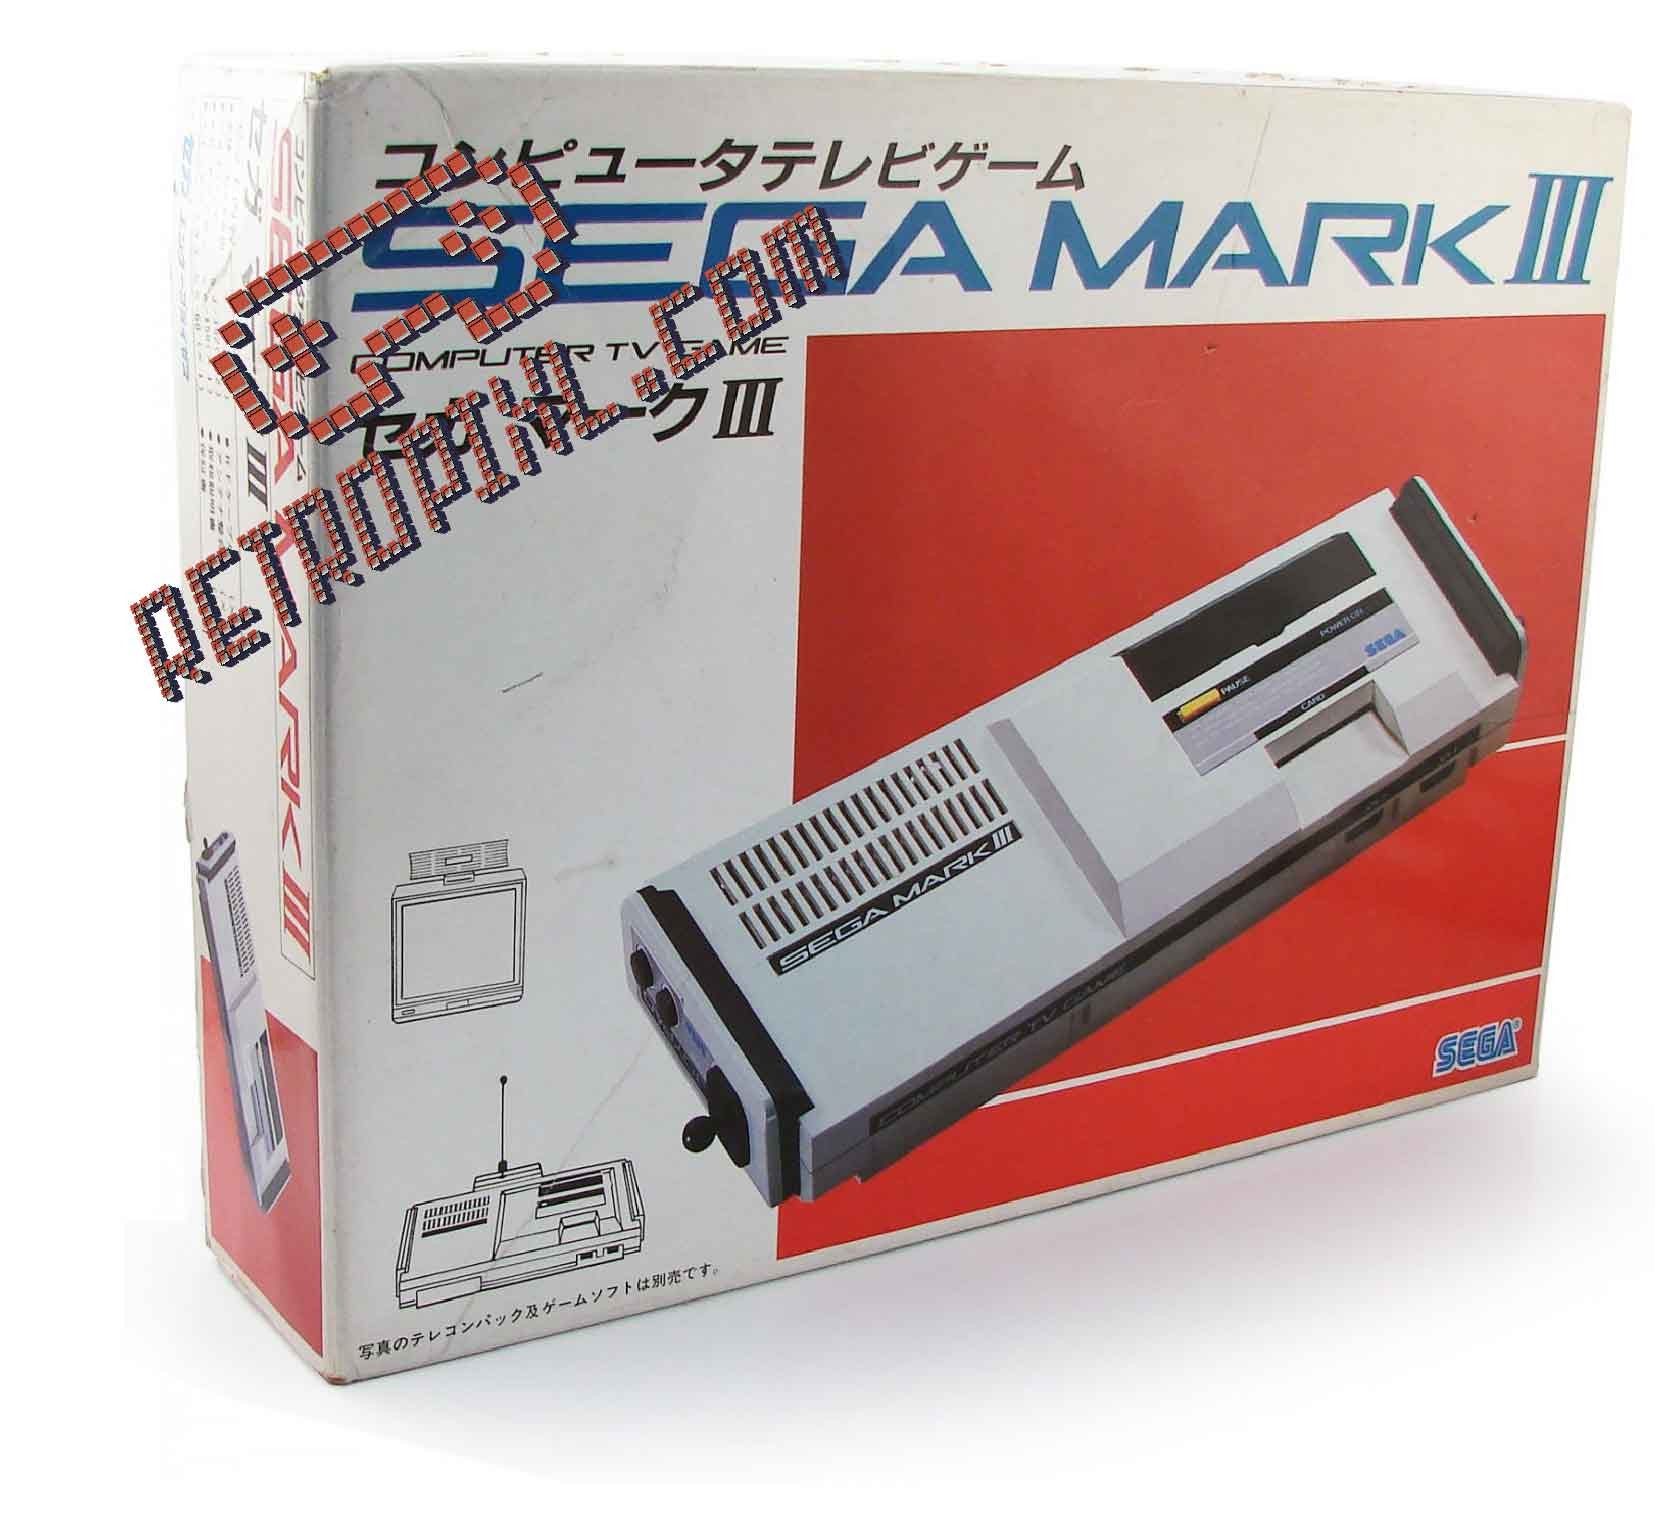 Sega SG-1000 Mark III